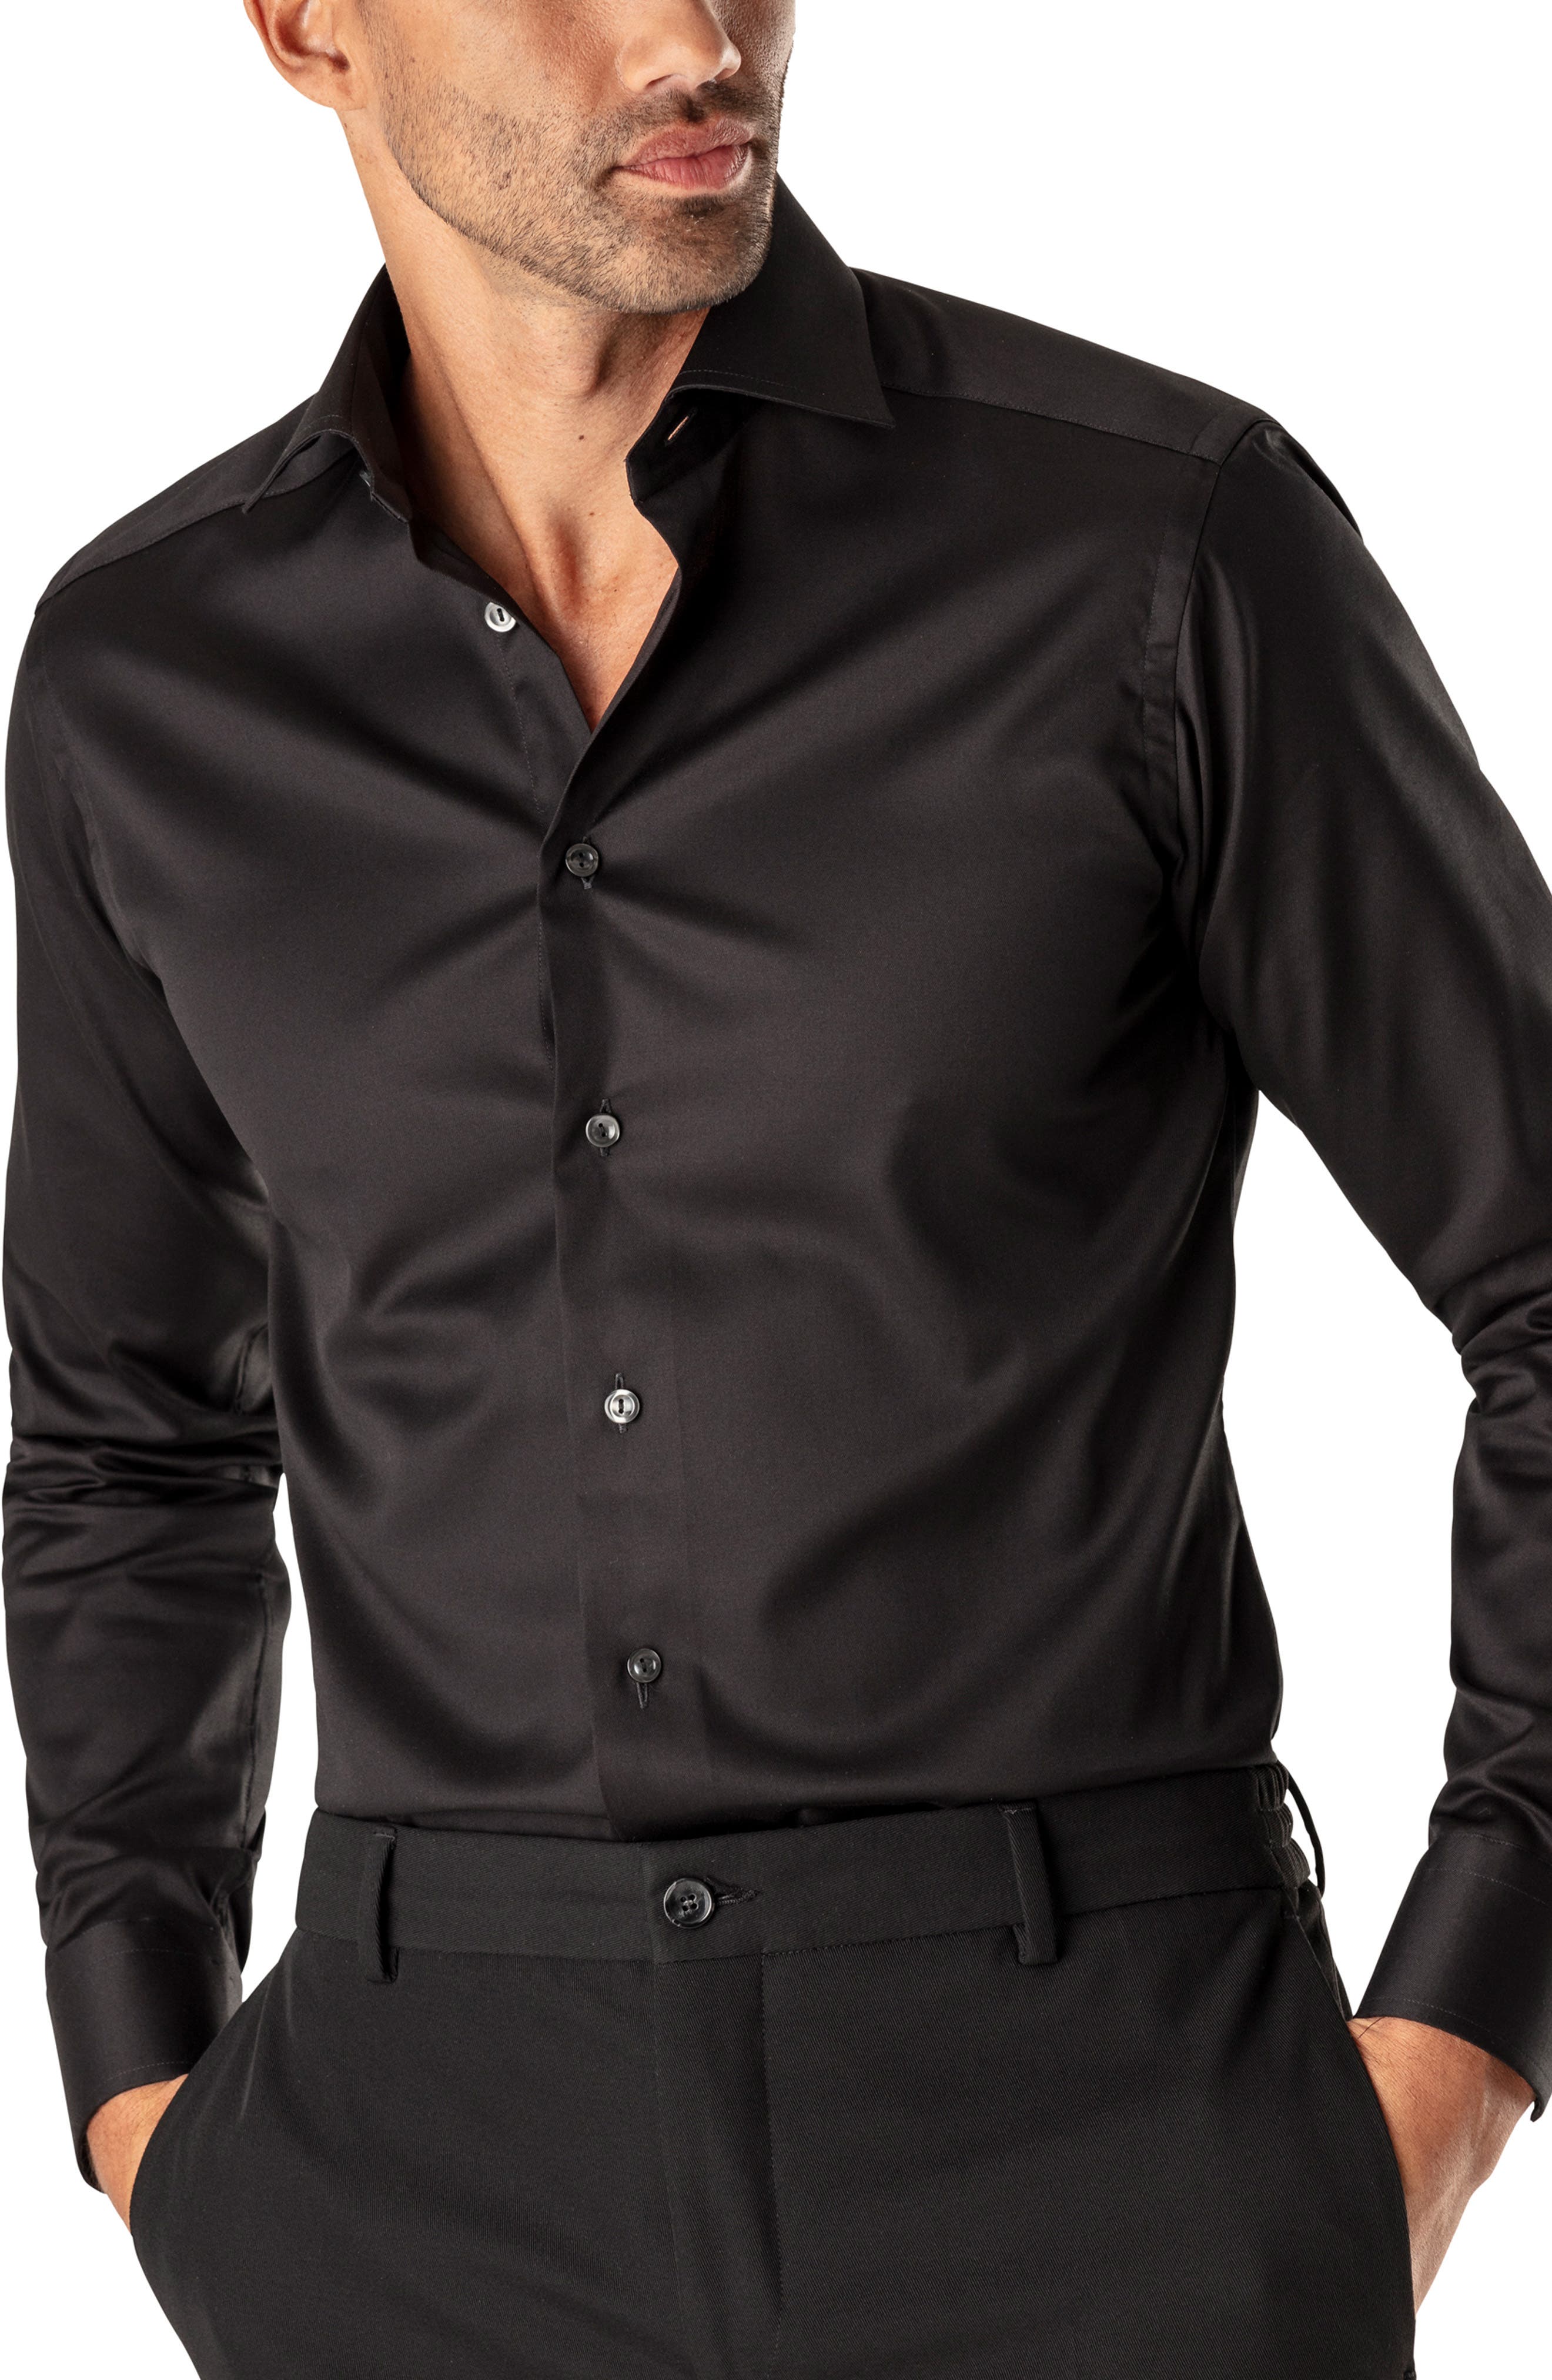 Men Shirts Long Sleeve Cotton Business Casual Shirt Men Long Sleeved,Black,L,C 